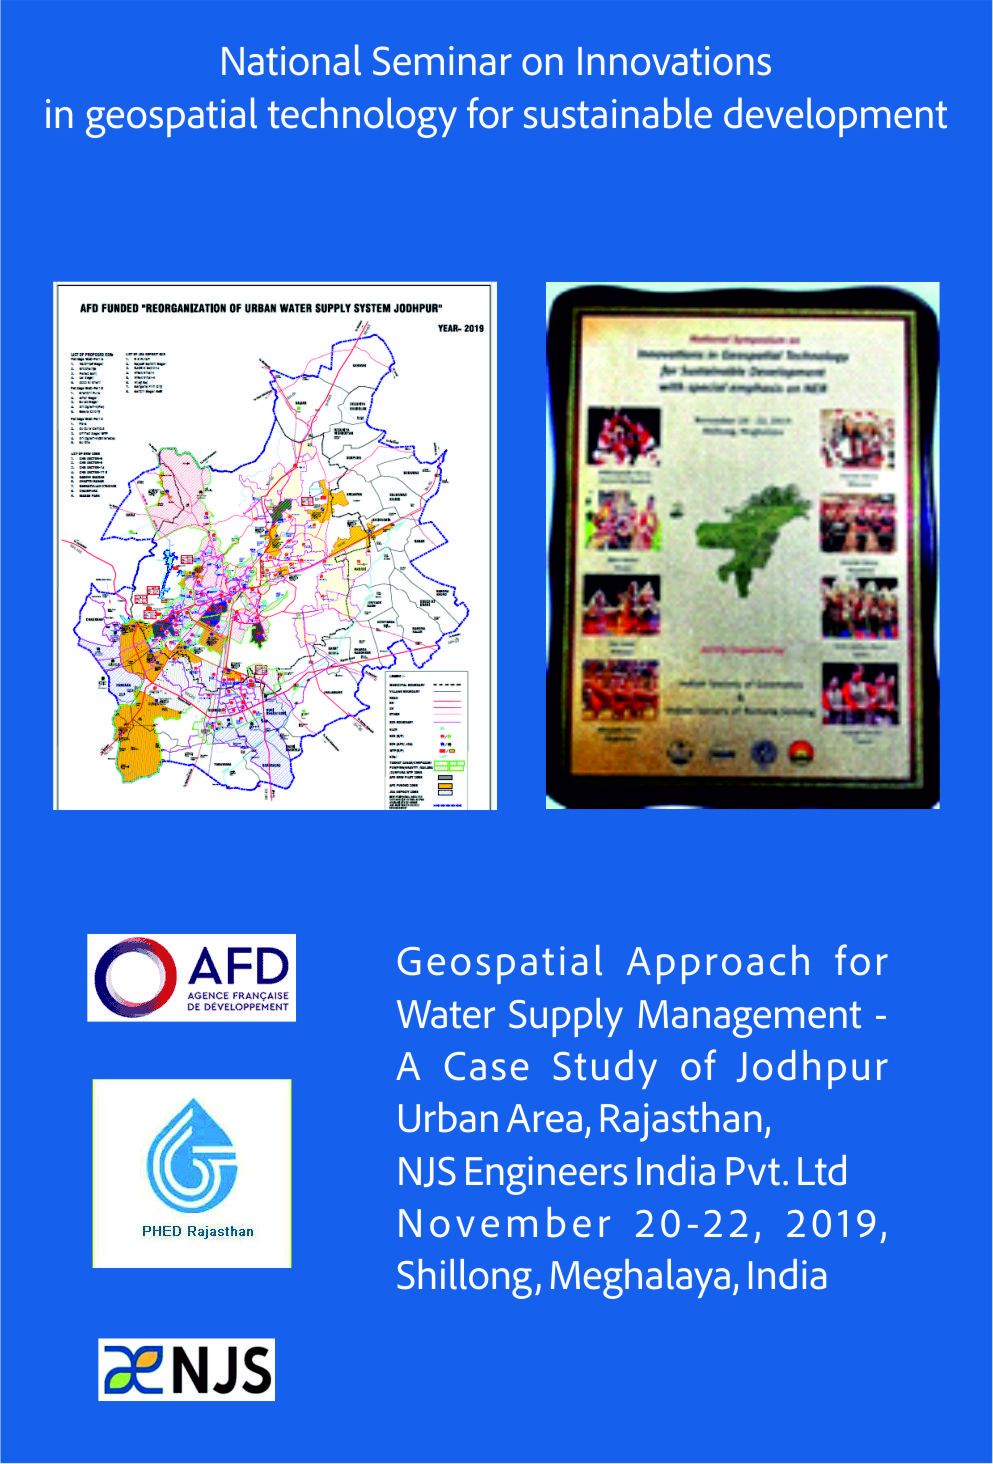 JICA Assisted AFD Funded Reorganization of Water Supply at Jodhpur, Rajasthan